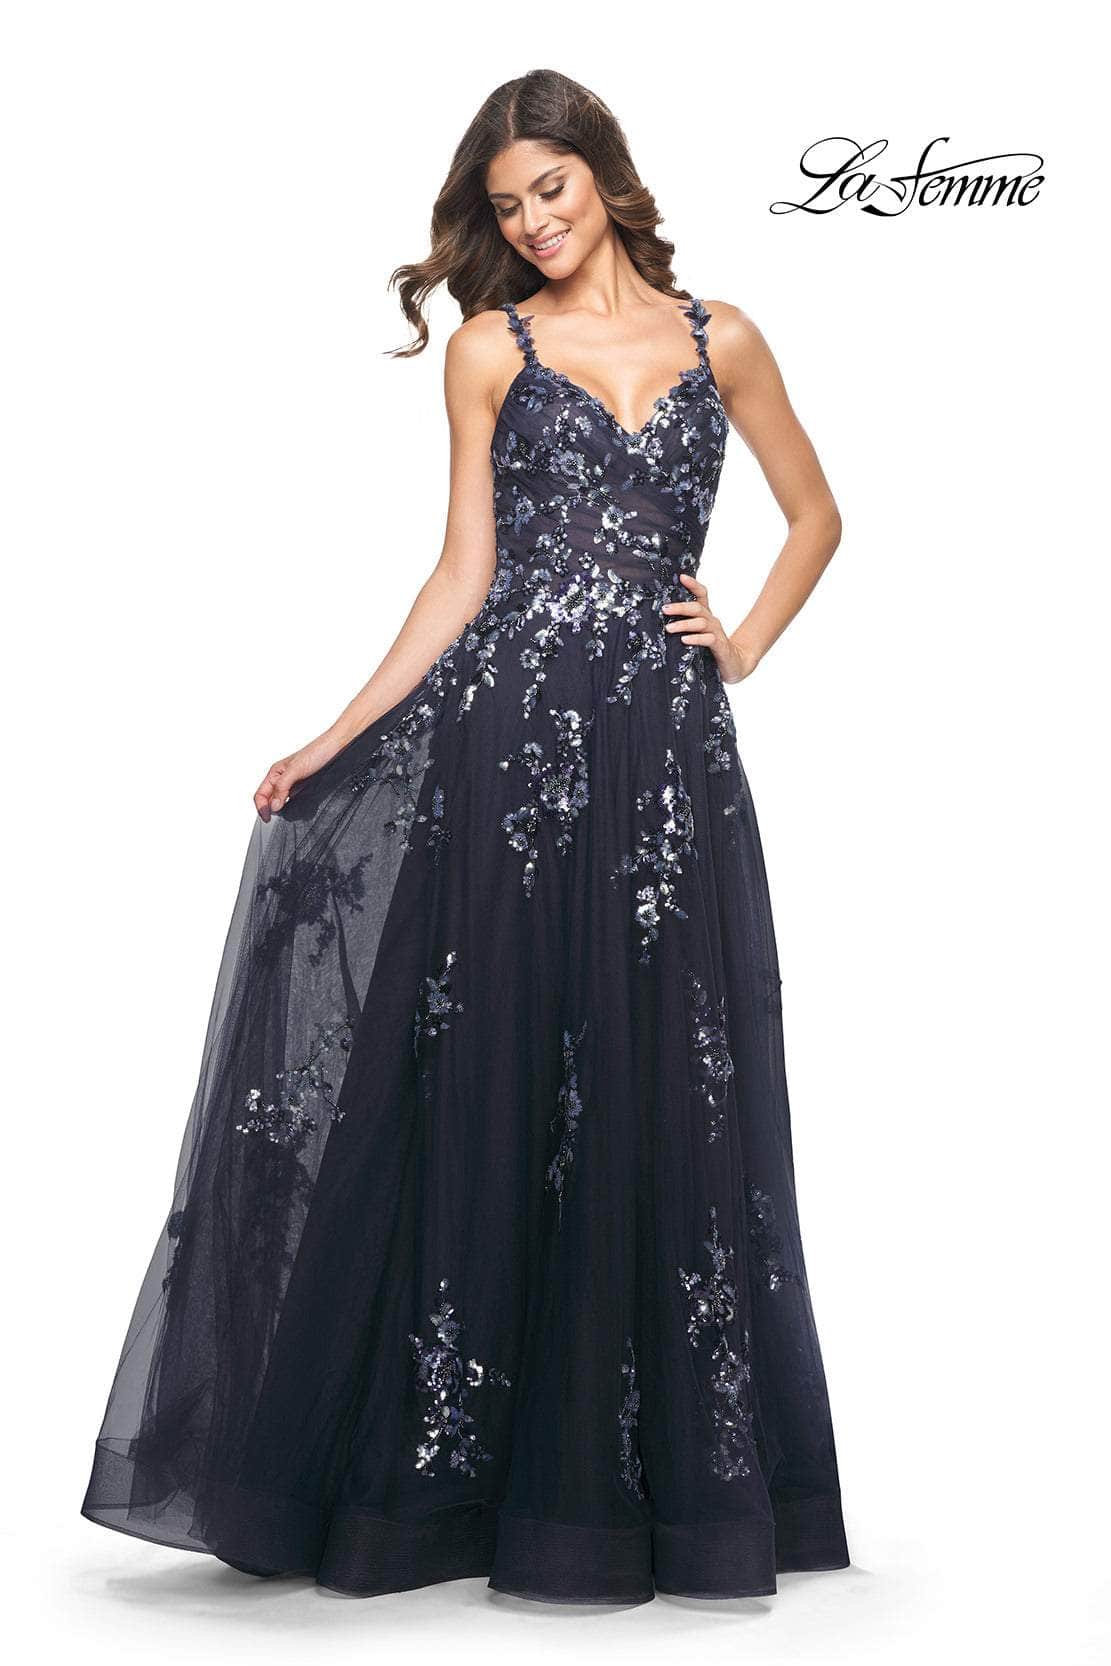 La Femme 31936 - Floral Applique V-Neck Prom Gown
